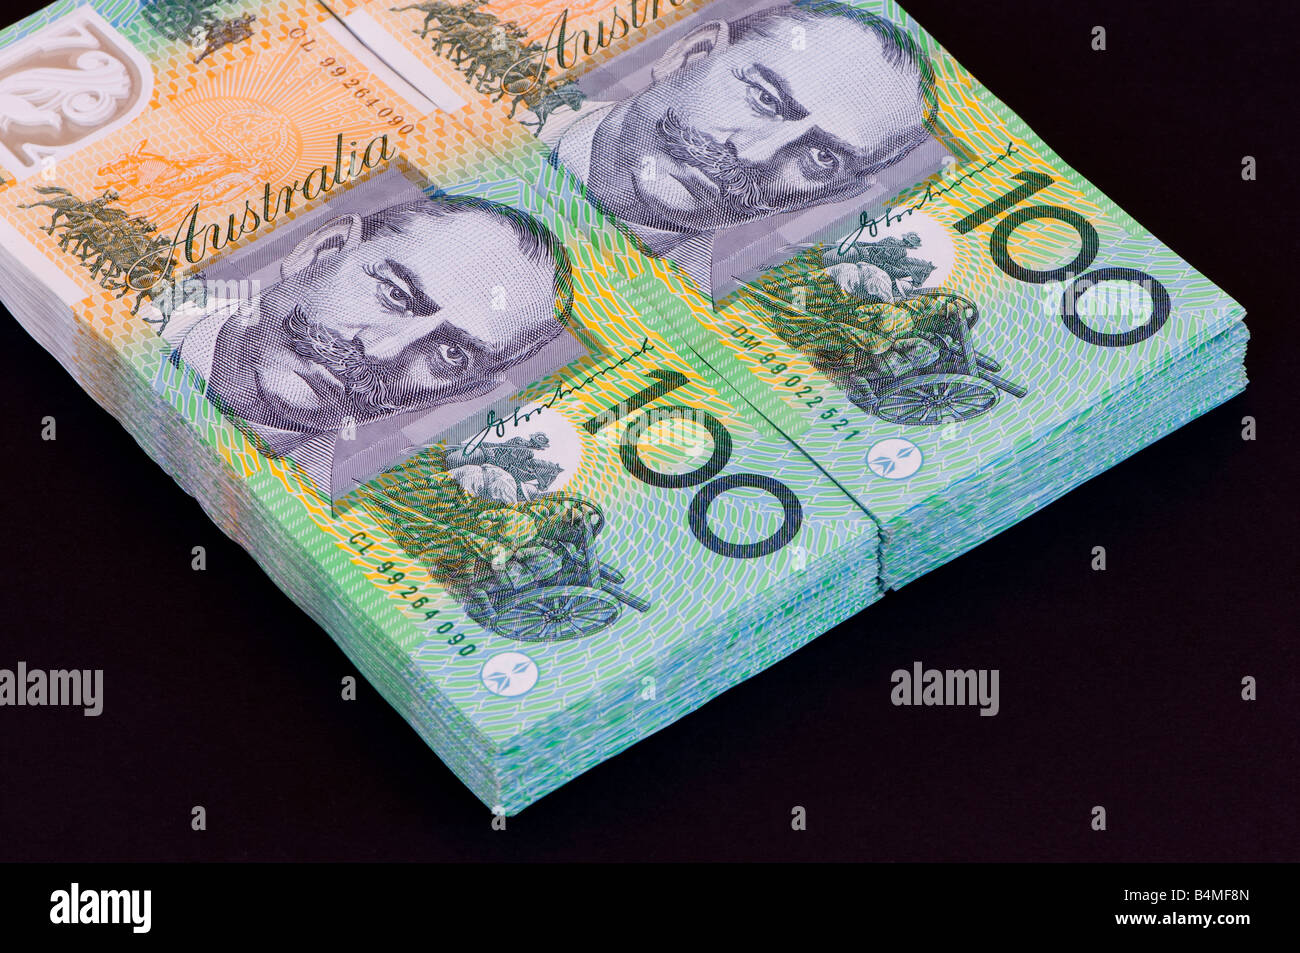 Vend om tjære pistol A$20,000 twenty thousand Australian dollars in $100 bills Stock Photo -  Alamy